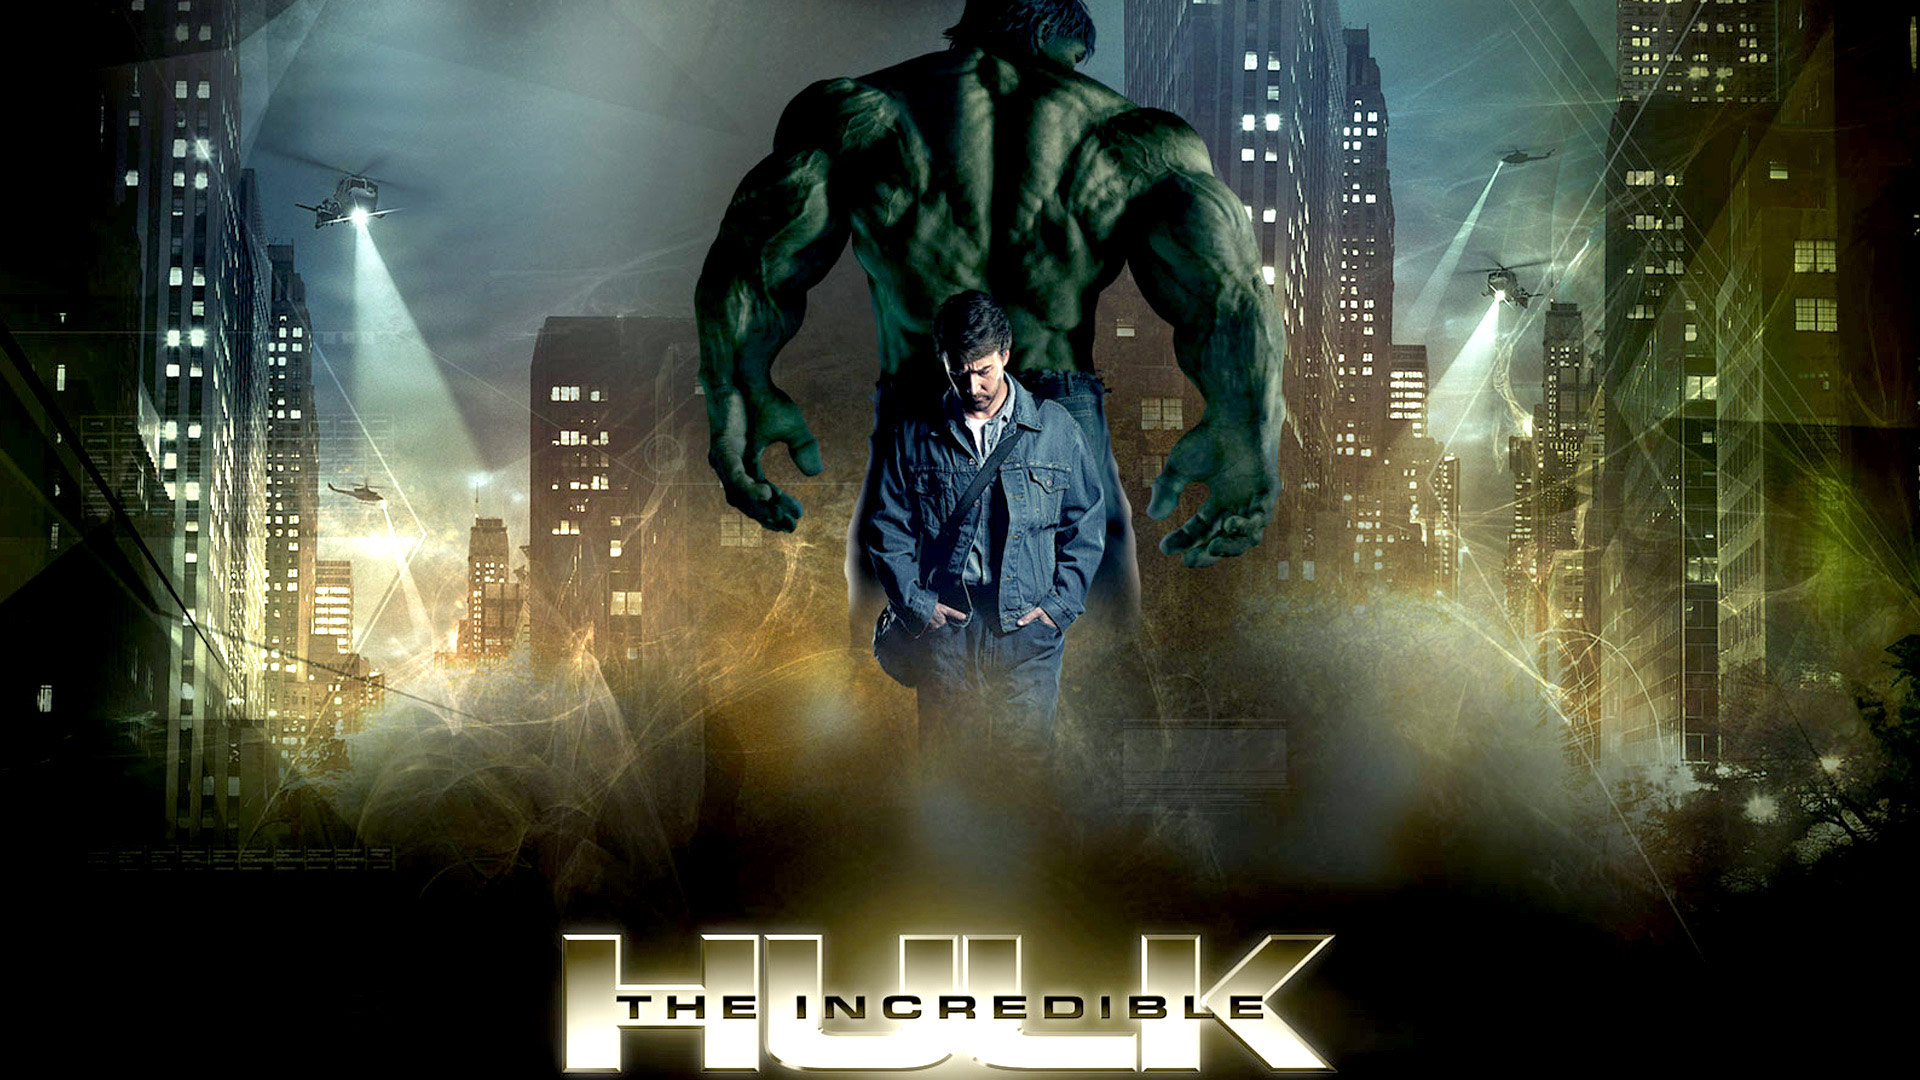 The Incredible Hulk Movie Wallpaper Wallpaperin4k